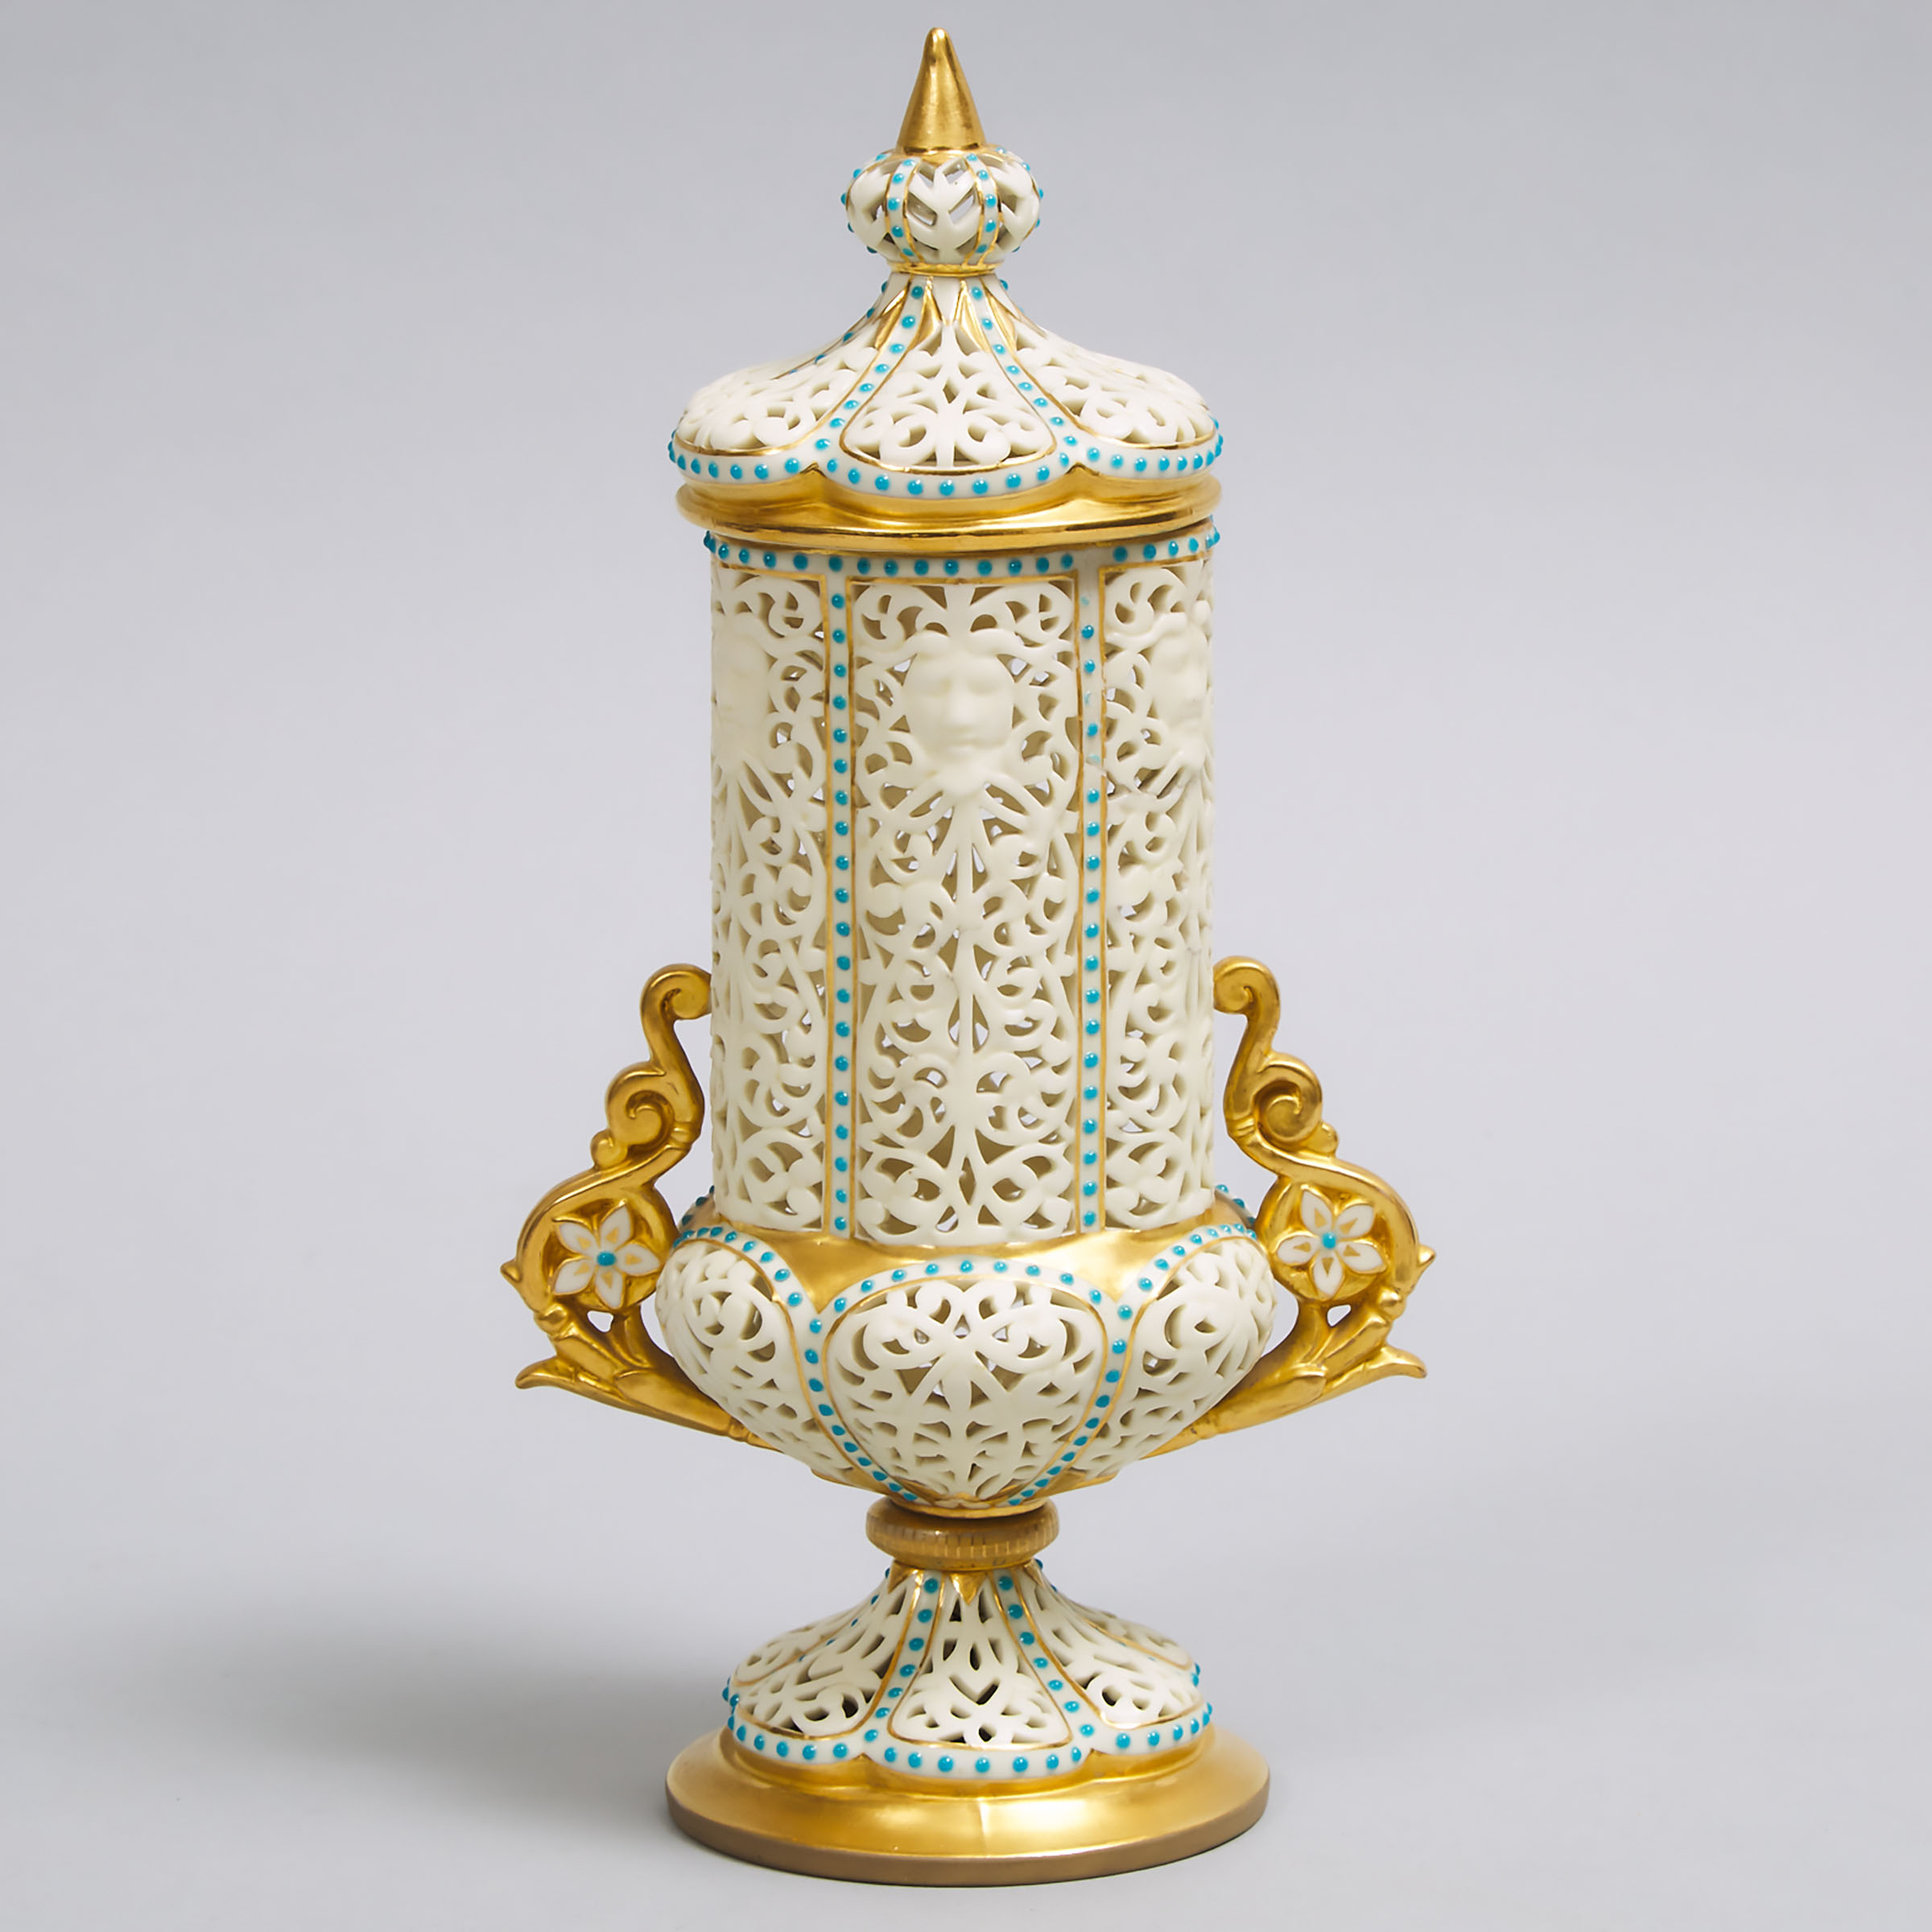 Grainger Worcester Reticulated and Enameled Covered Vase, c.1891-1902